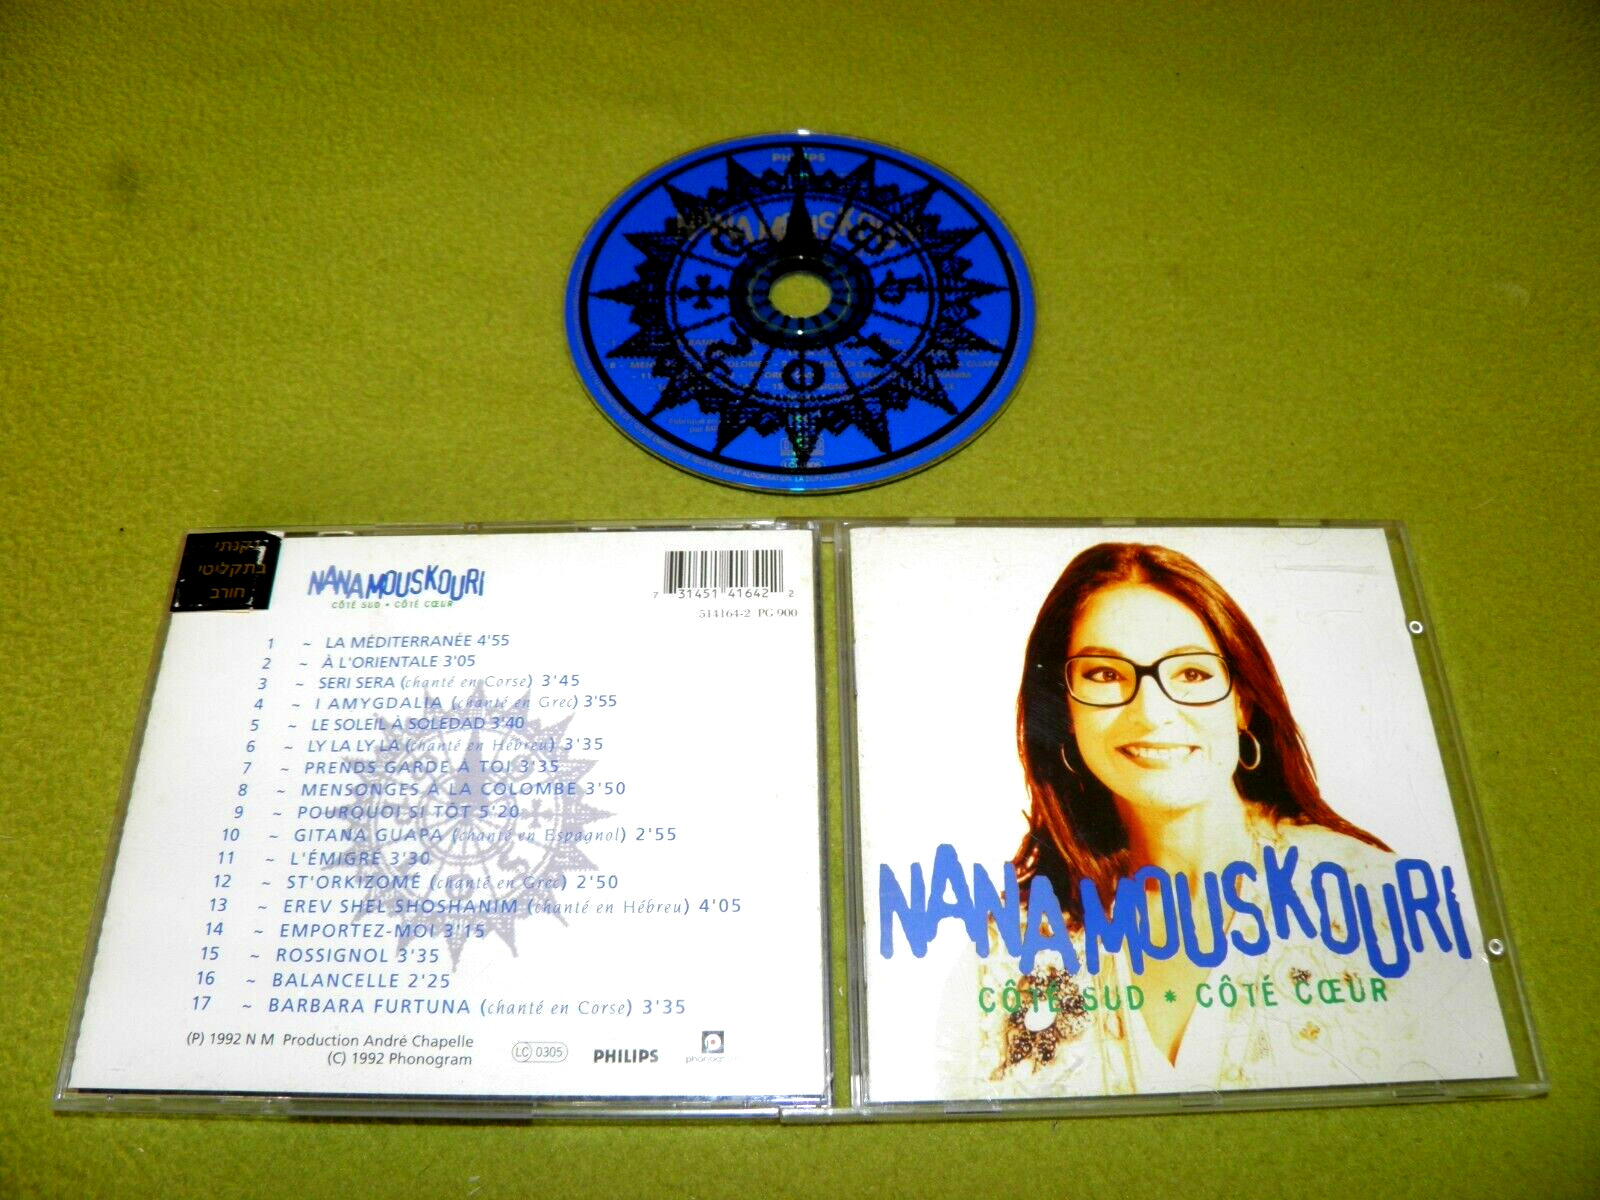 Nana Mouskouri - Cote Sud Cote Coeur - RARE 1992 France IMPORT Philips CD